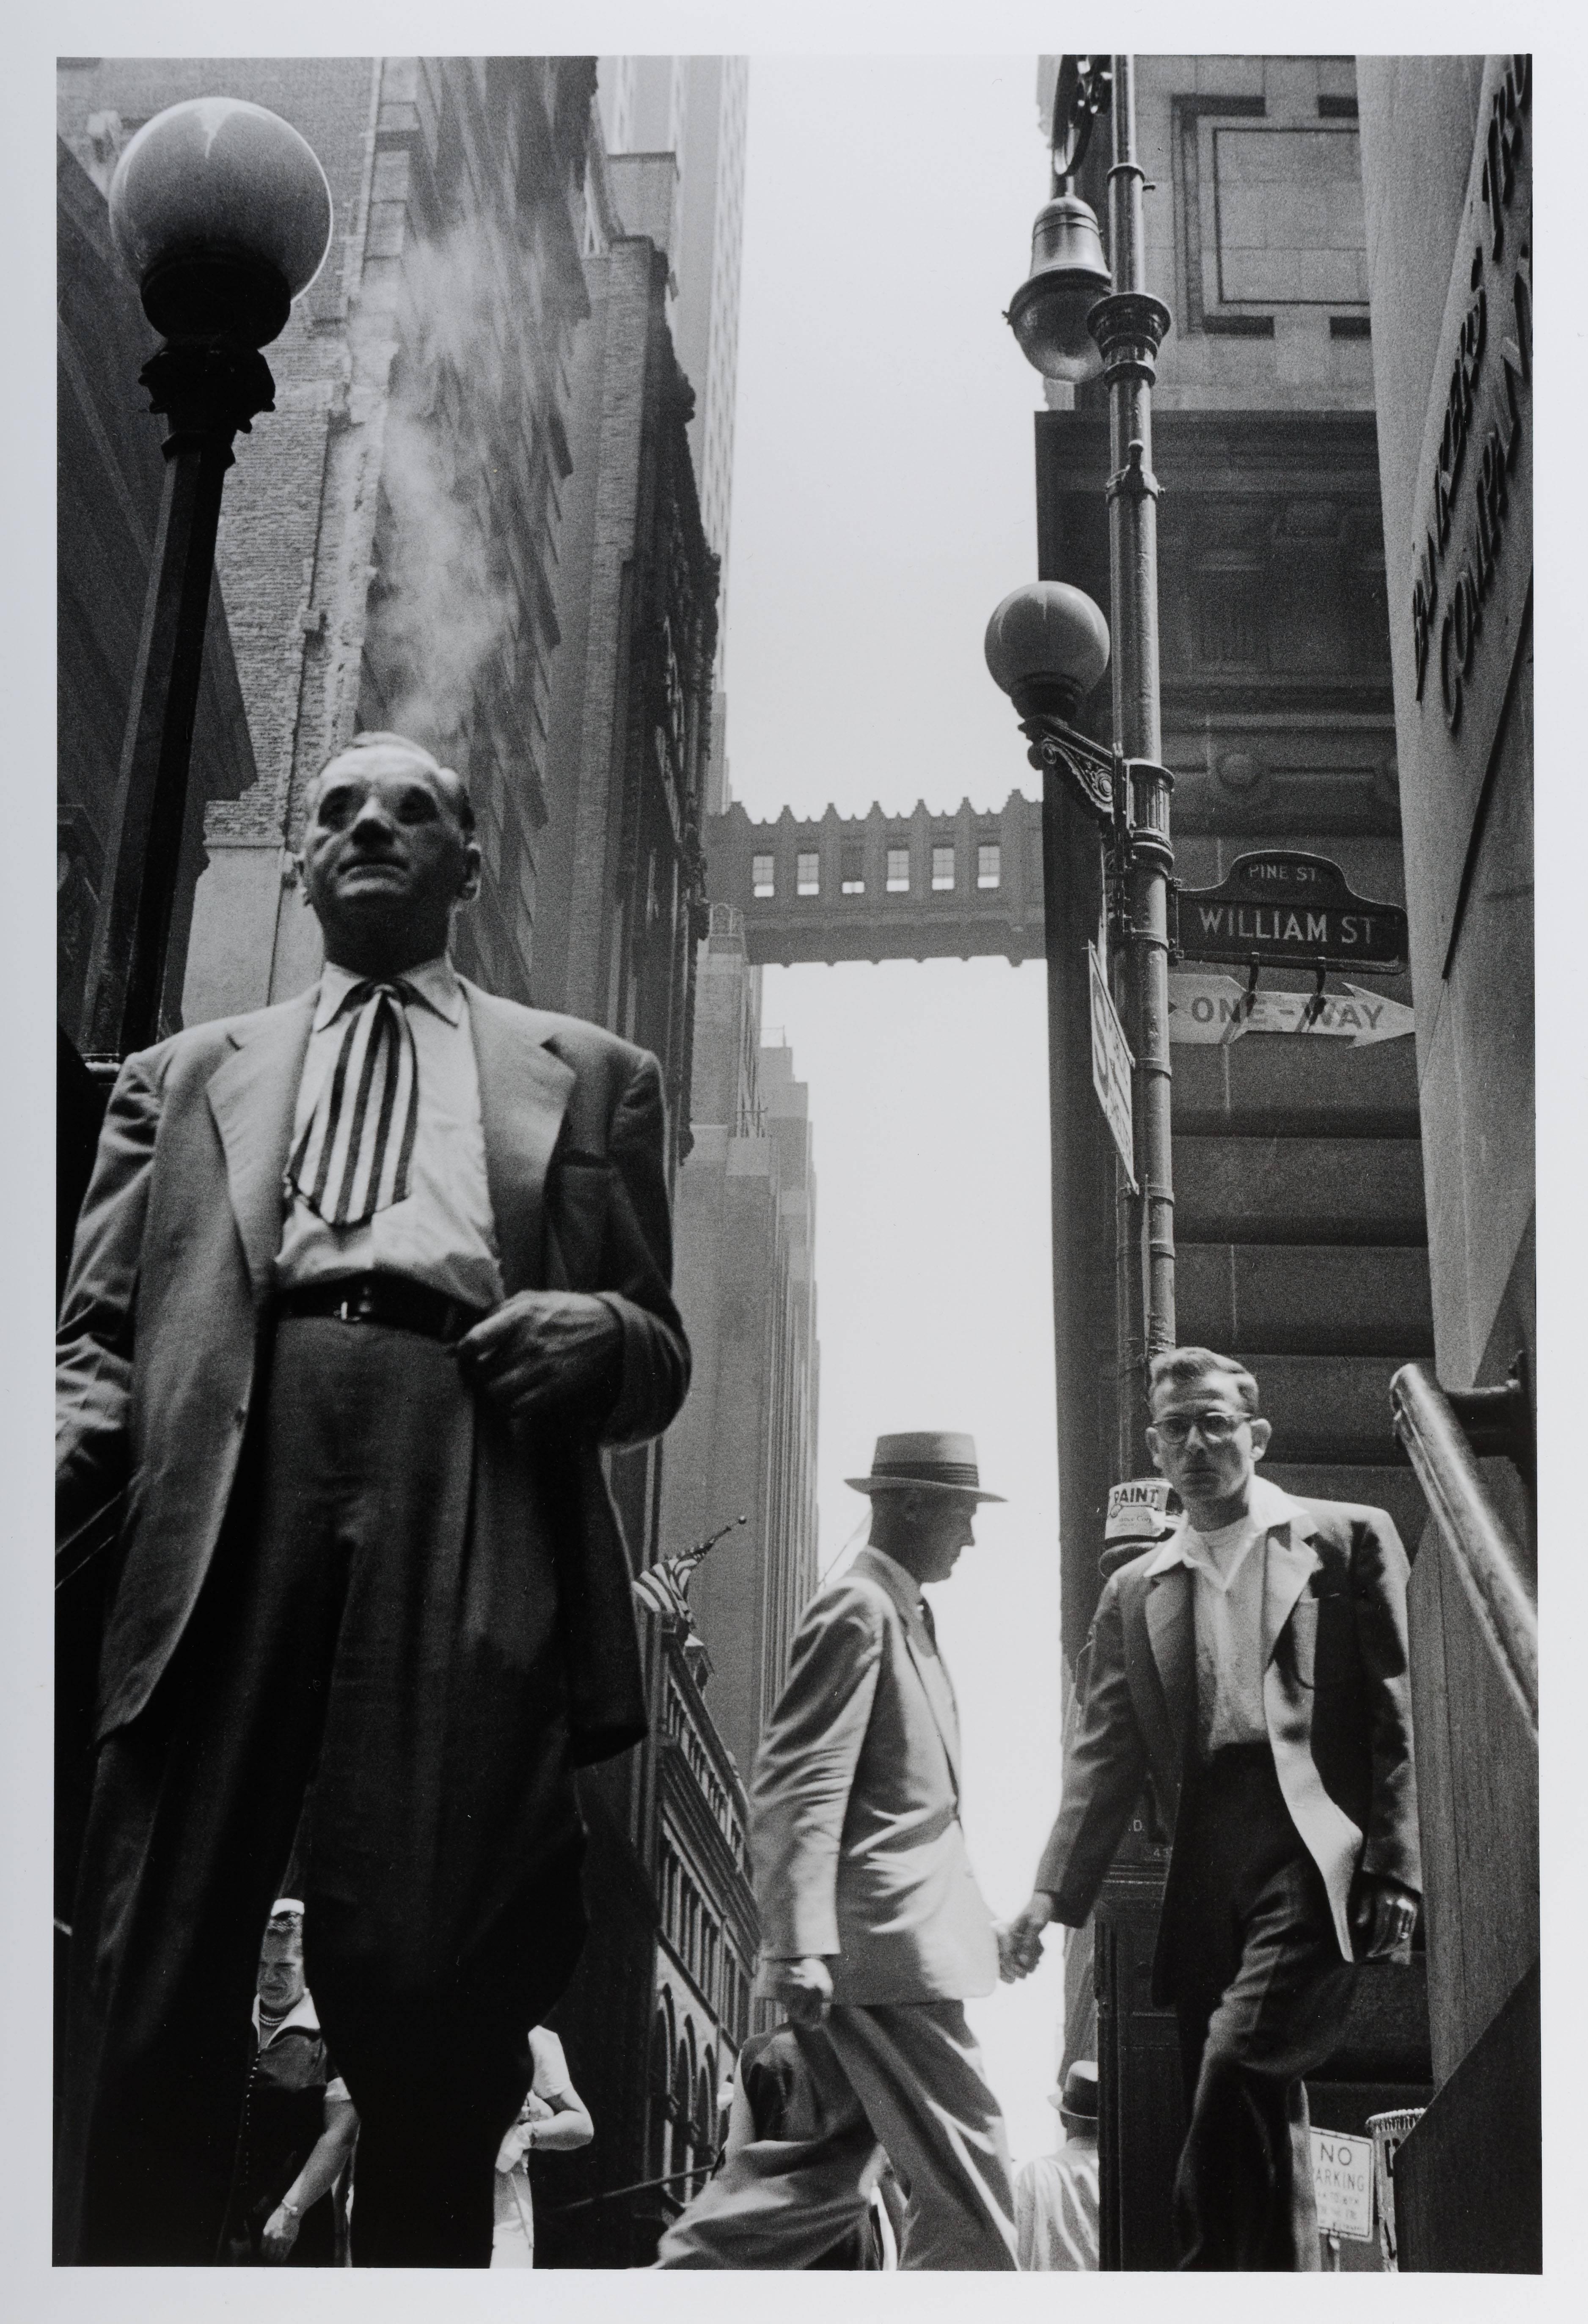 Leonard Freed Black and White Photograph - Wall Street, NYC